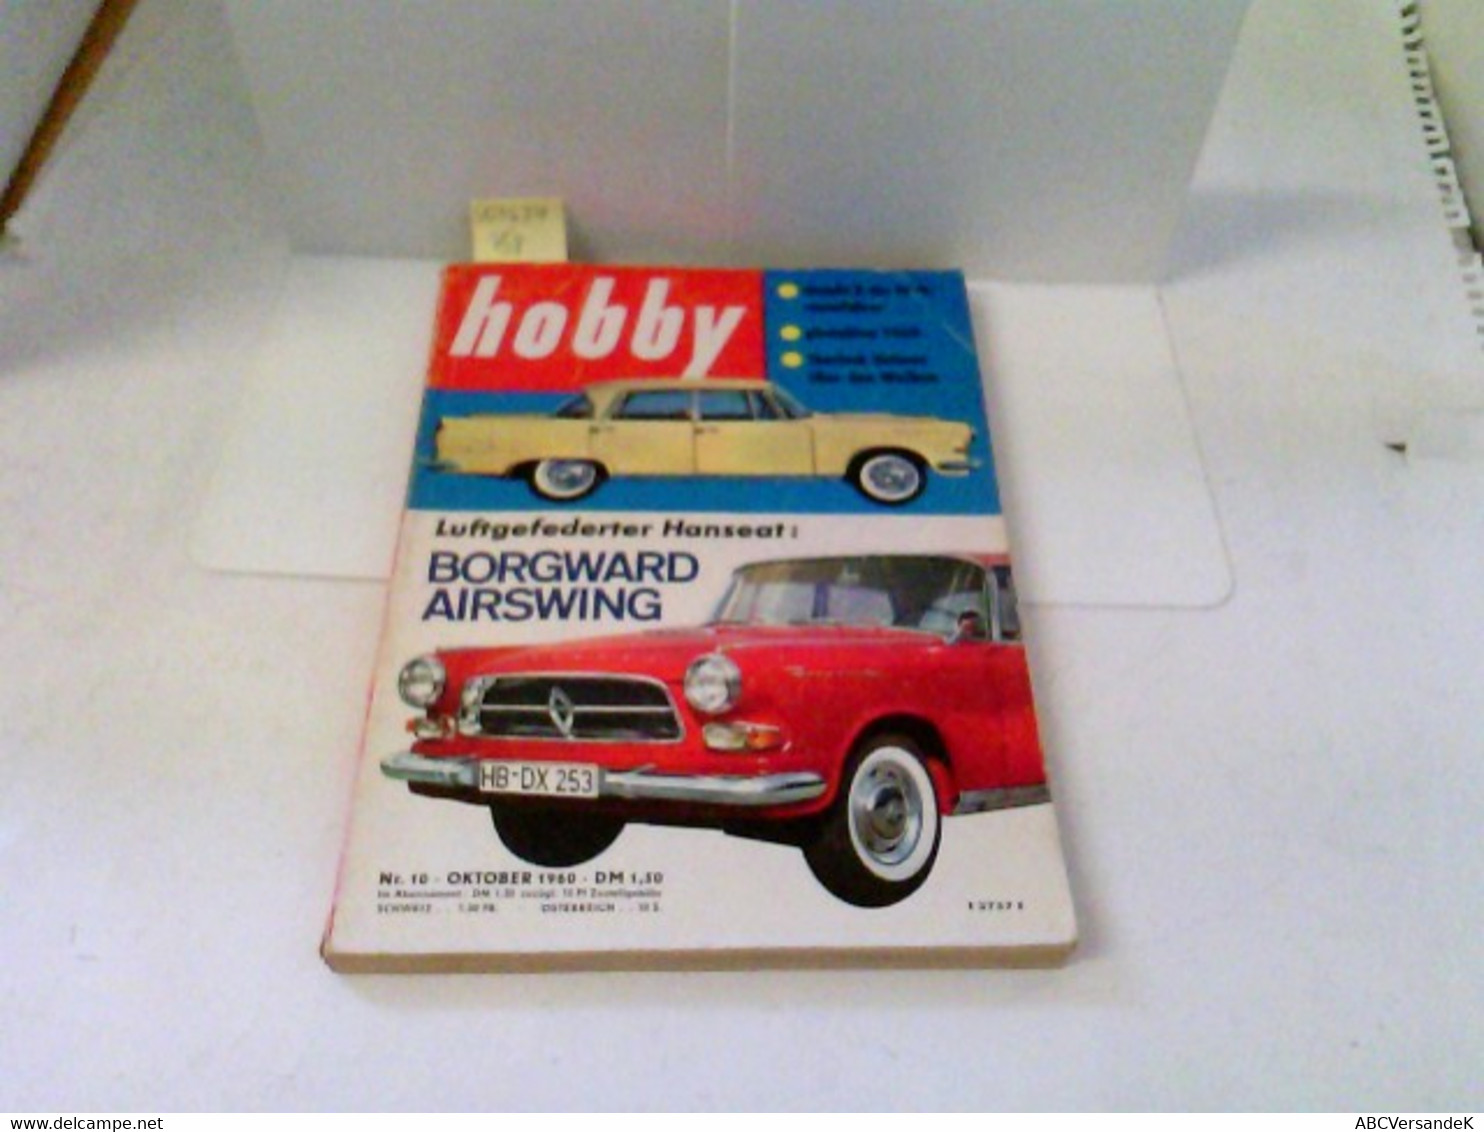 Hobby - Das Magazin Der Technik - Heft 1960/10 - Luftgefederter Hanseat: Borgward Airswing U.v.m. - Technik